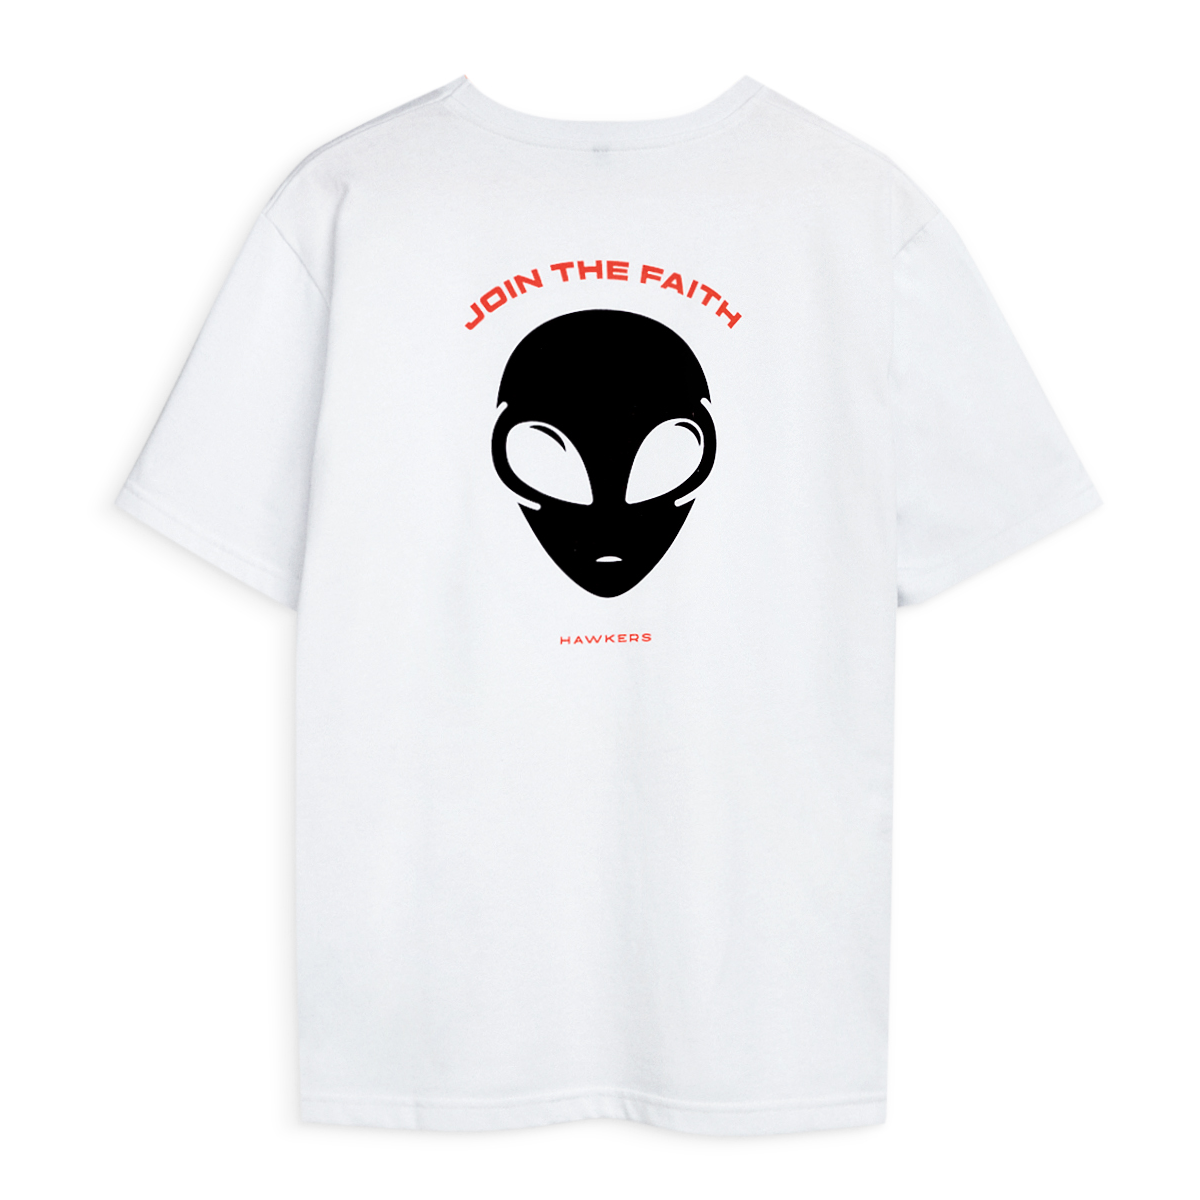 Ath T-shirt White (xs)